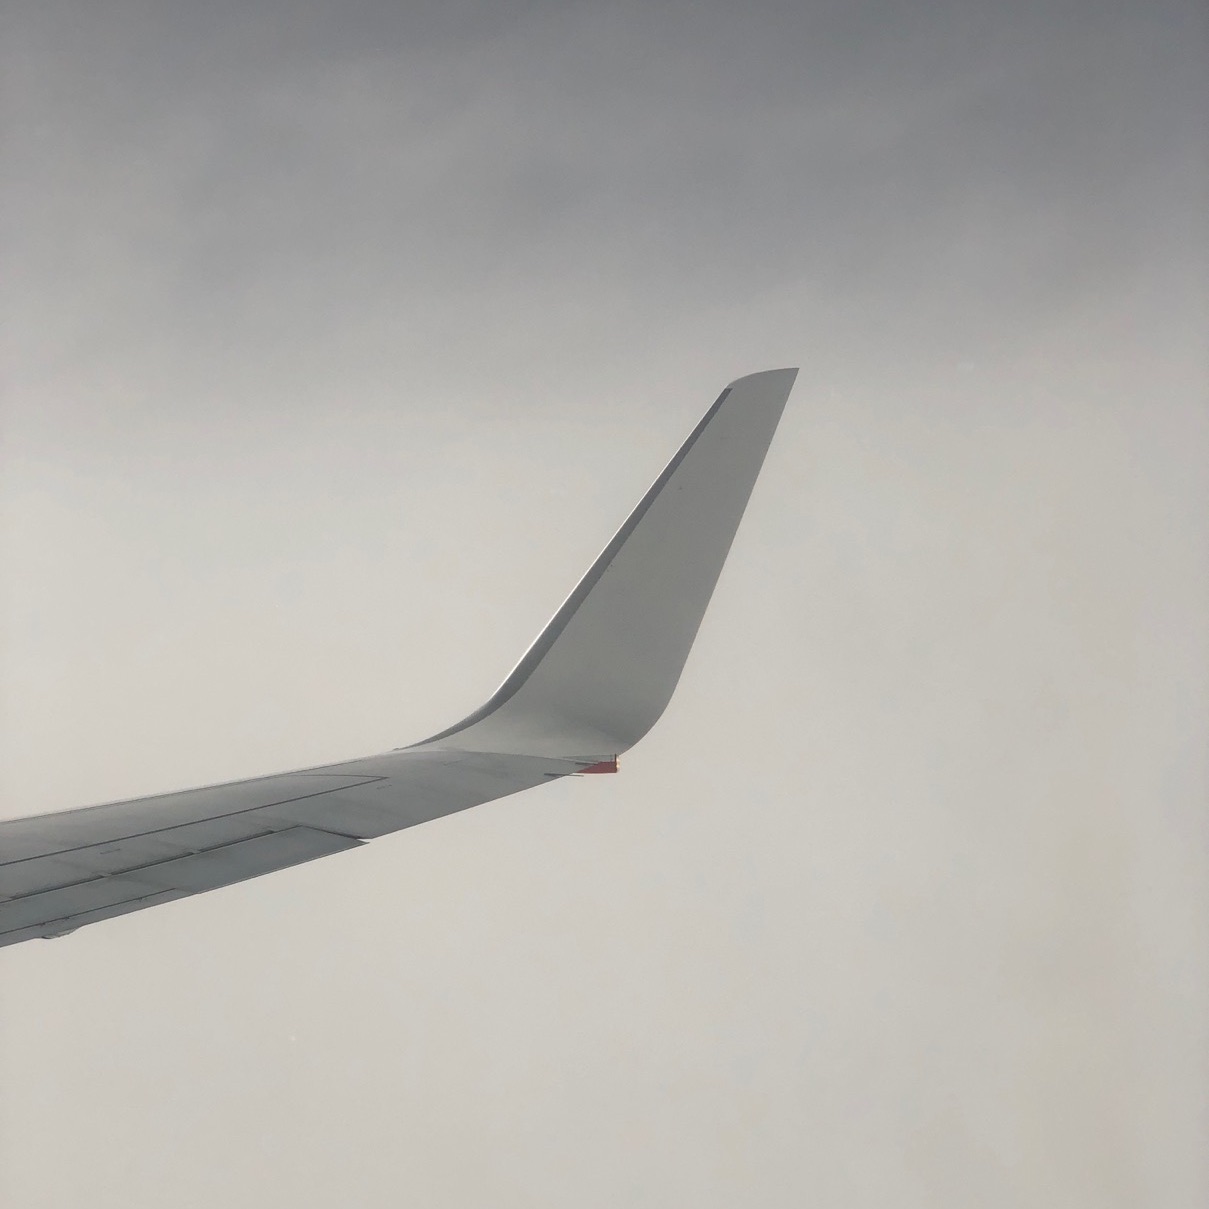 plane-wing-3.jpg